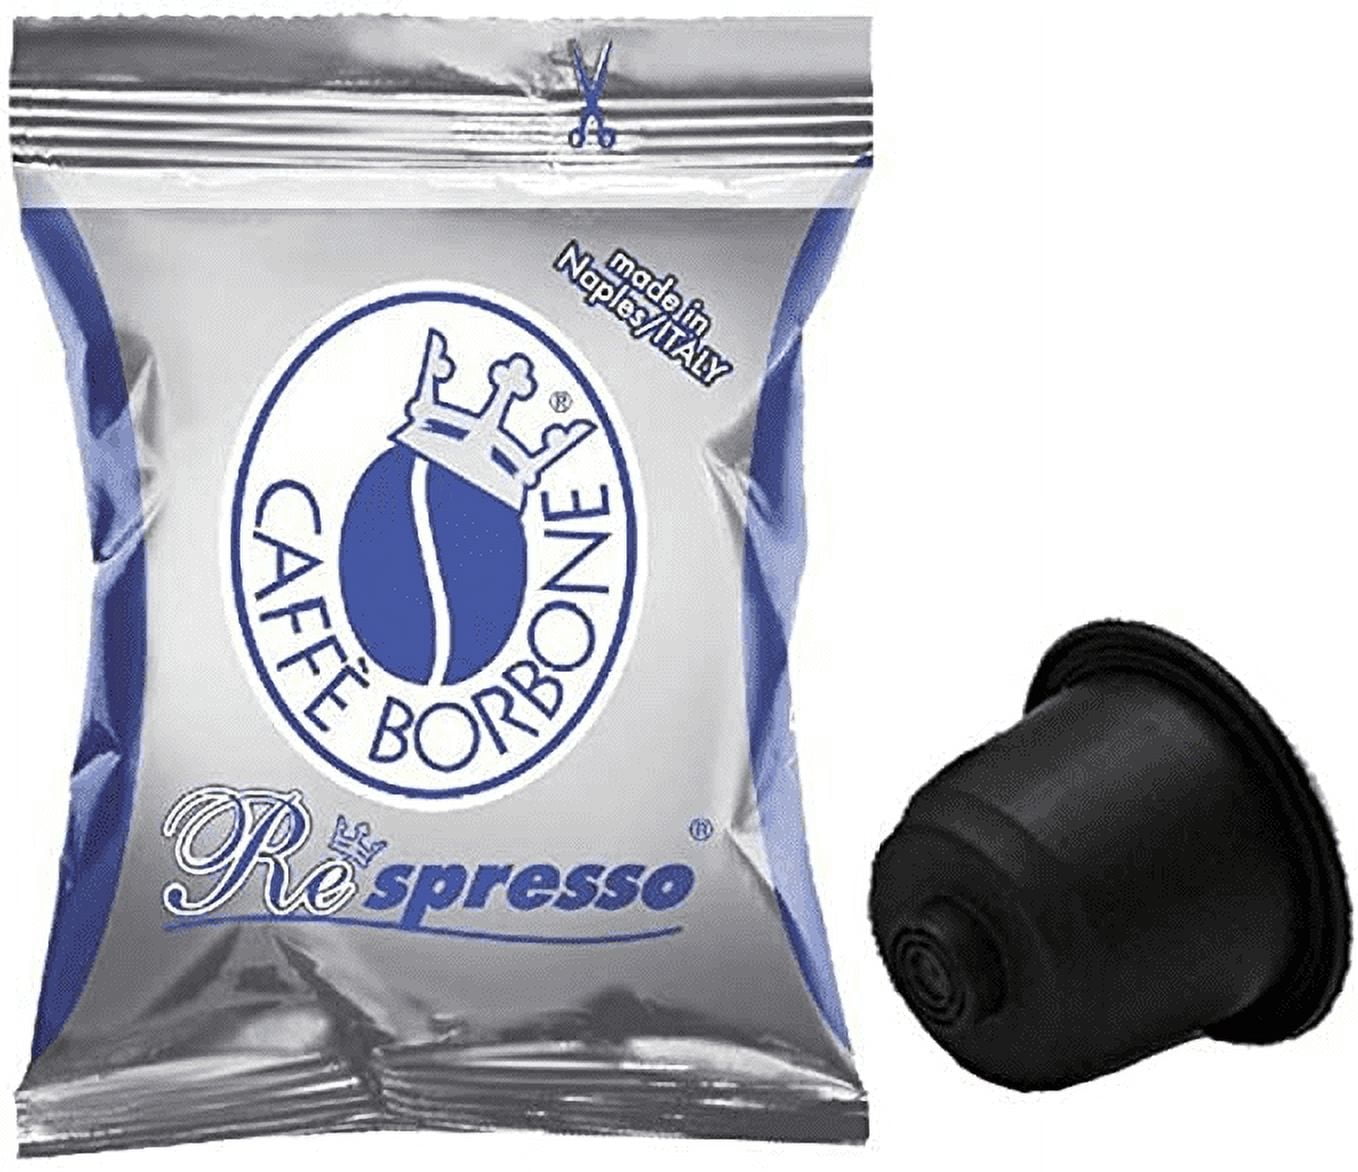 100 capsules de mélange Borbone Respresso Blue compatibles Nespresso